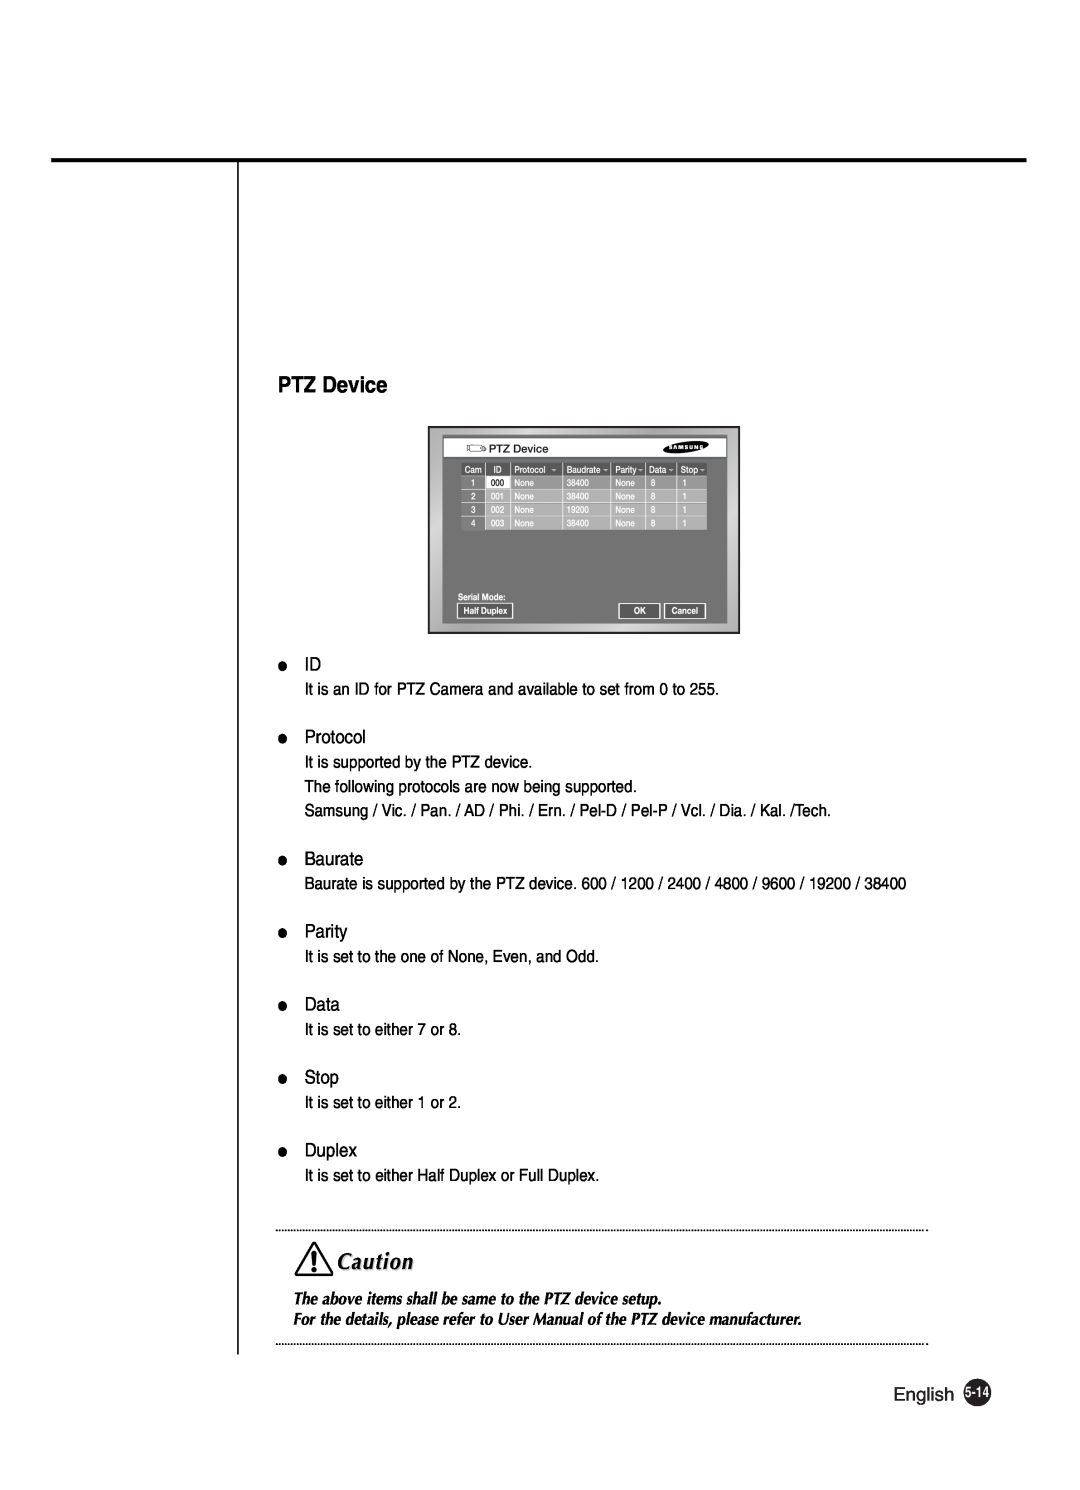 Samsung SHR-2042P250, SHR-2040P250 manual PTZ Device, English, The above items shall be same to the PTZ device setup 